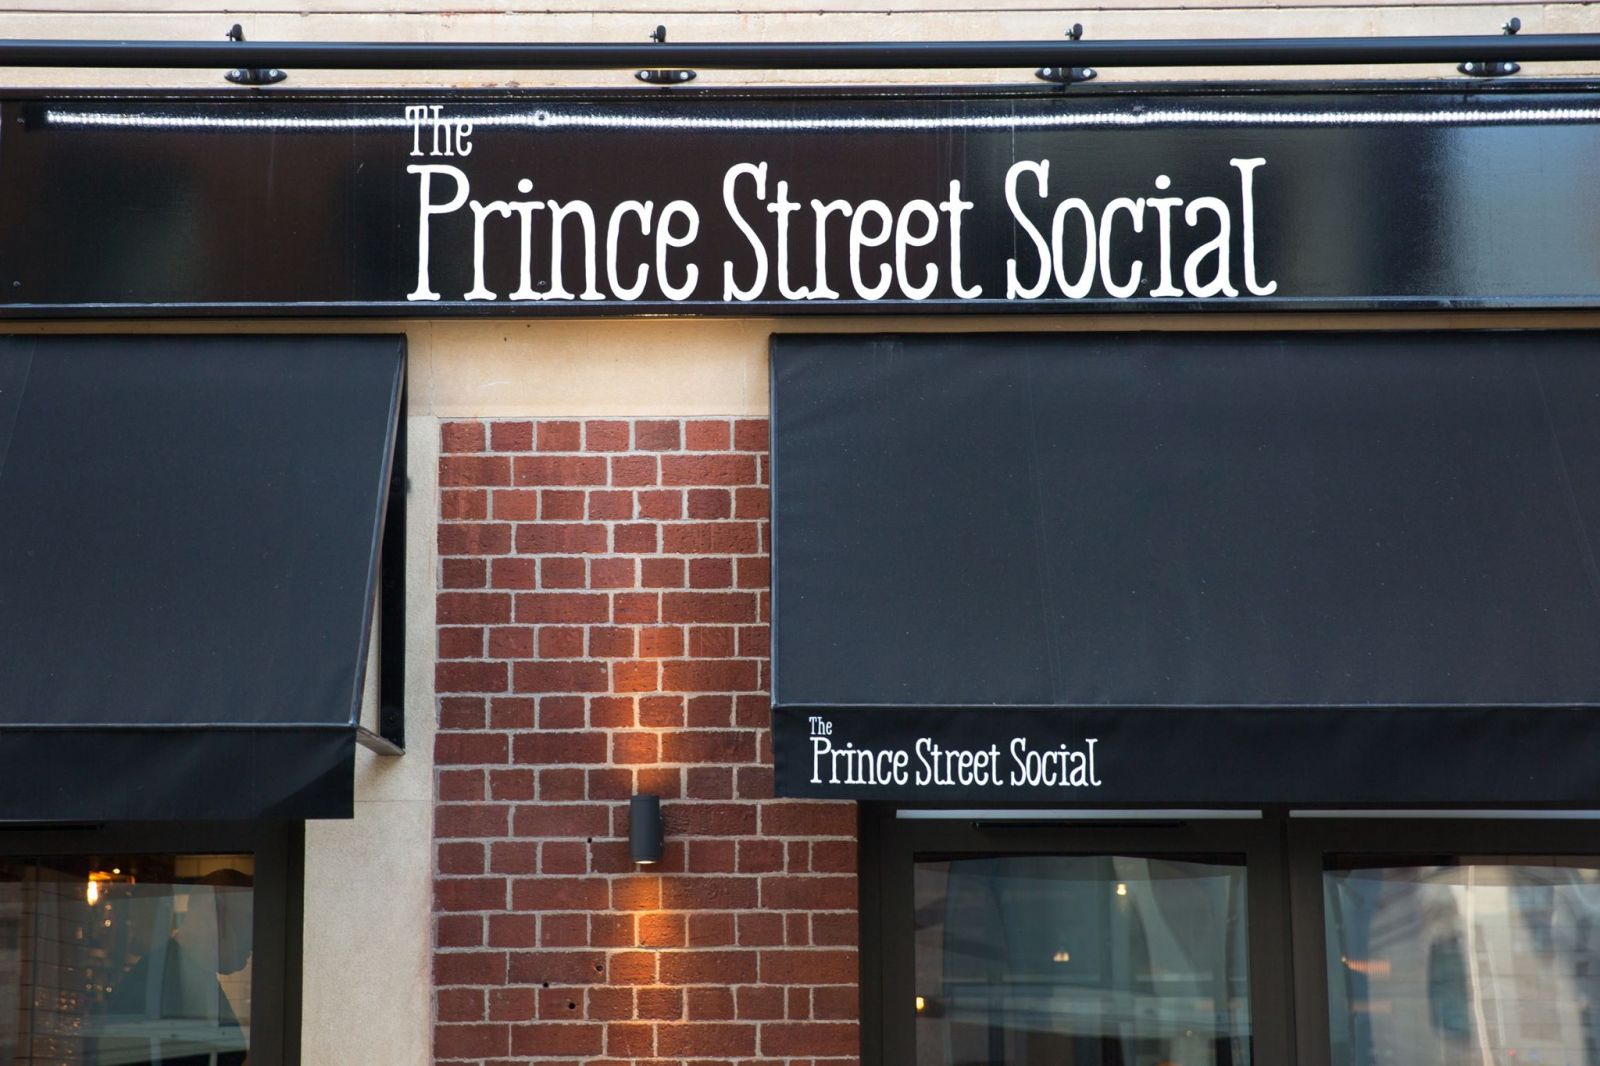 The Prince Street Social